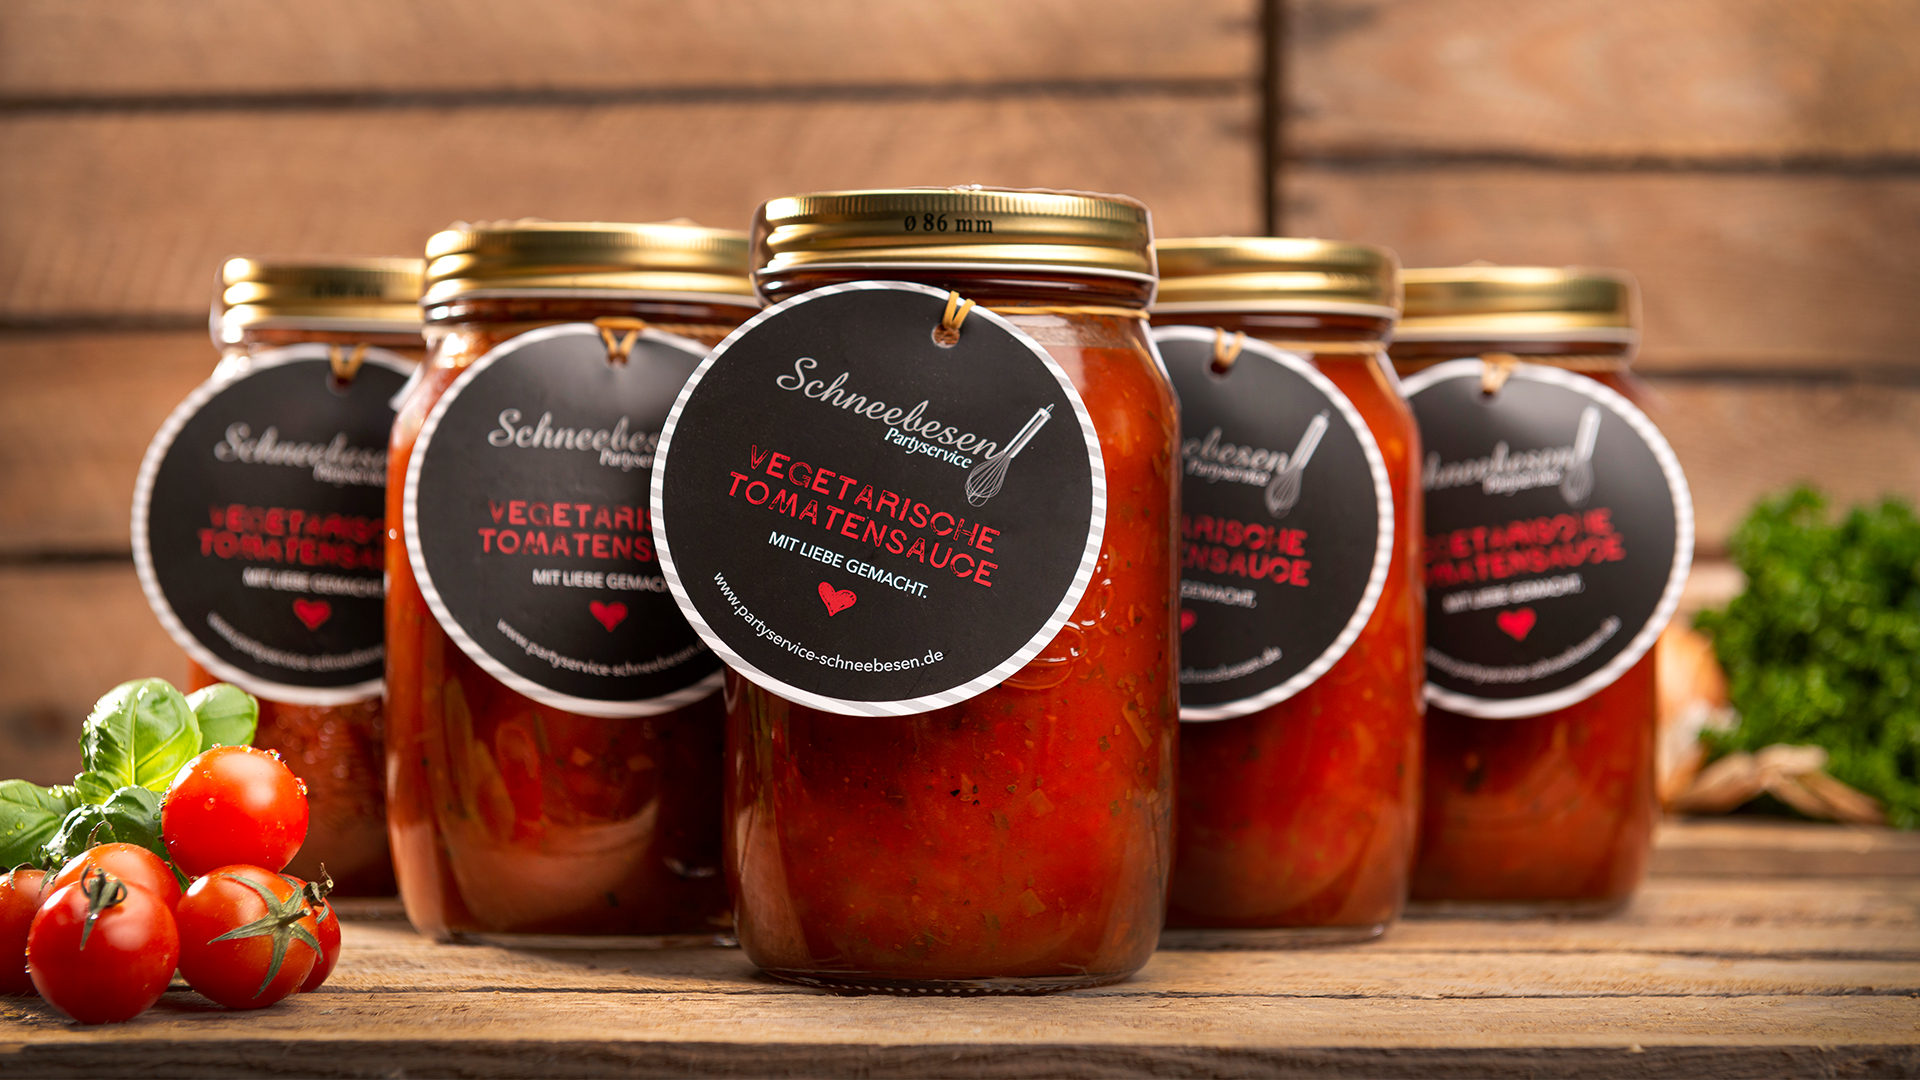 Scribble Werbeagentur nah bei Köln zeigt Etiketten am Produkt vegetarische Tomatensause. 